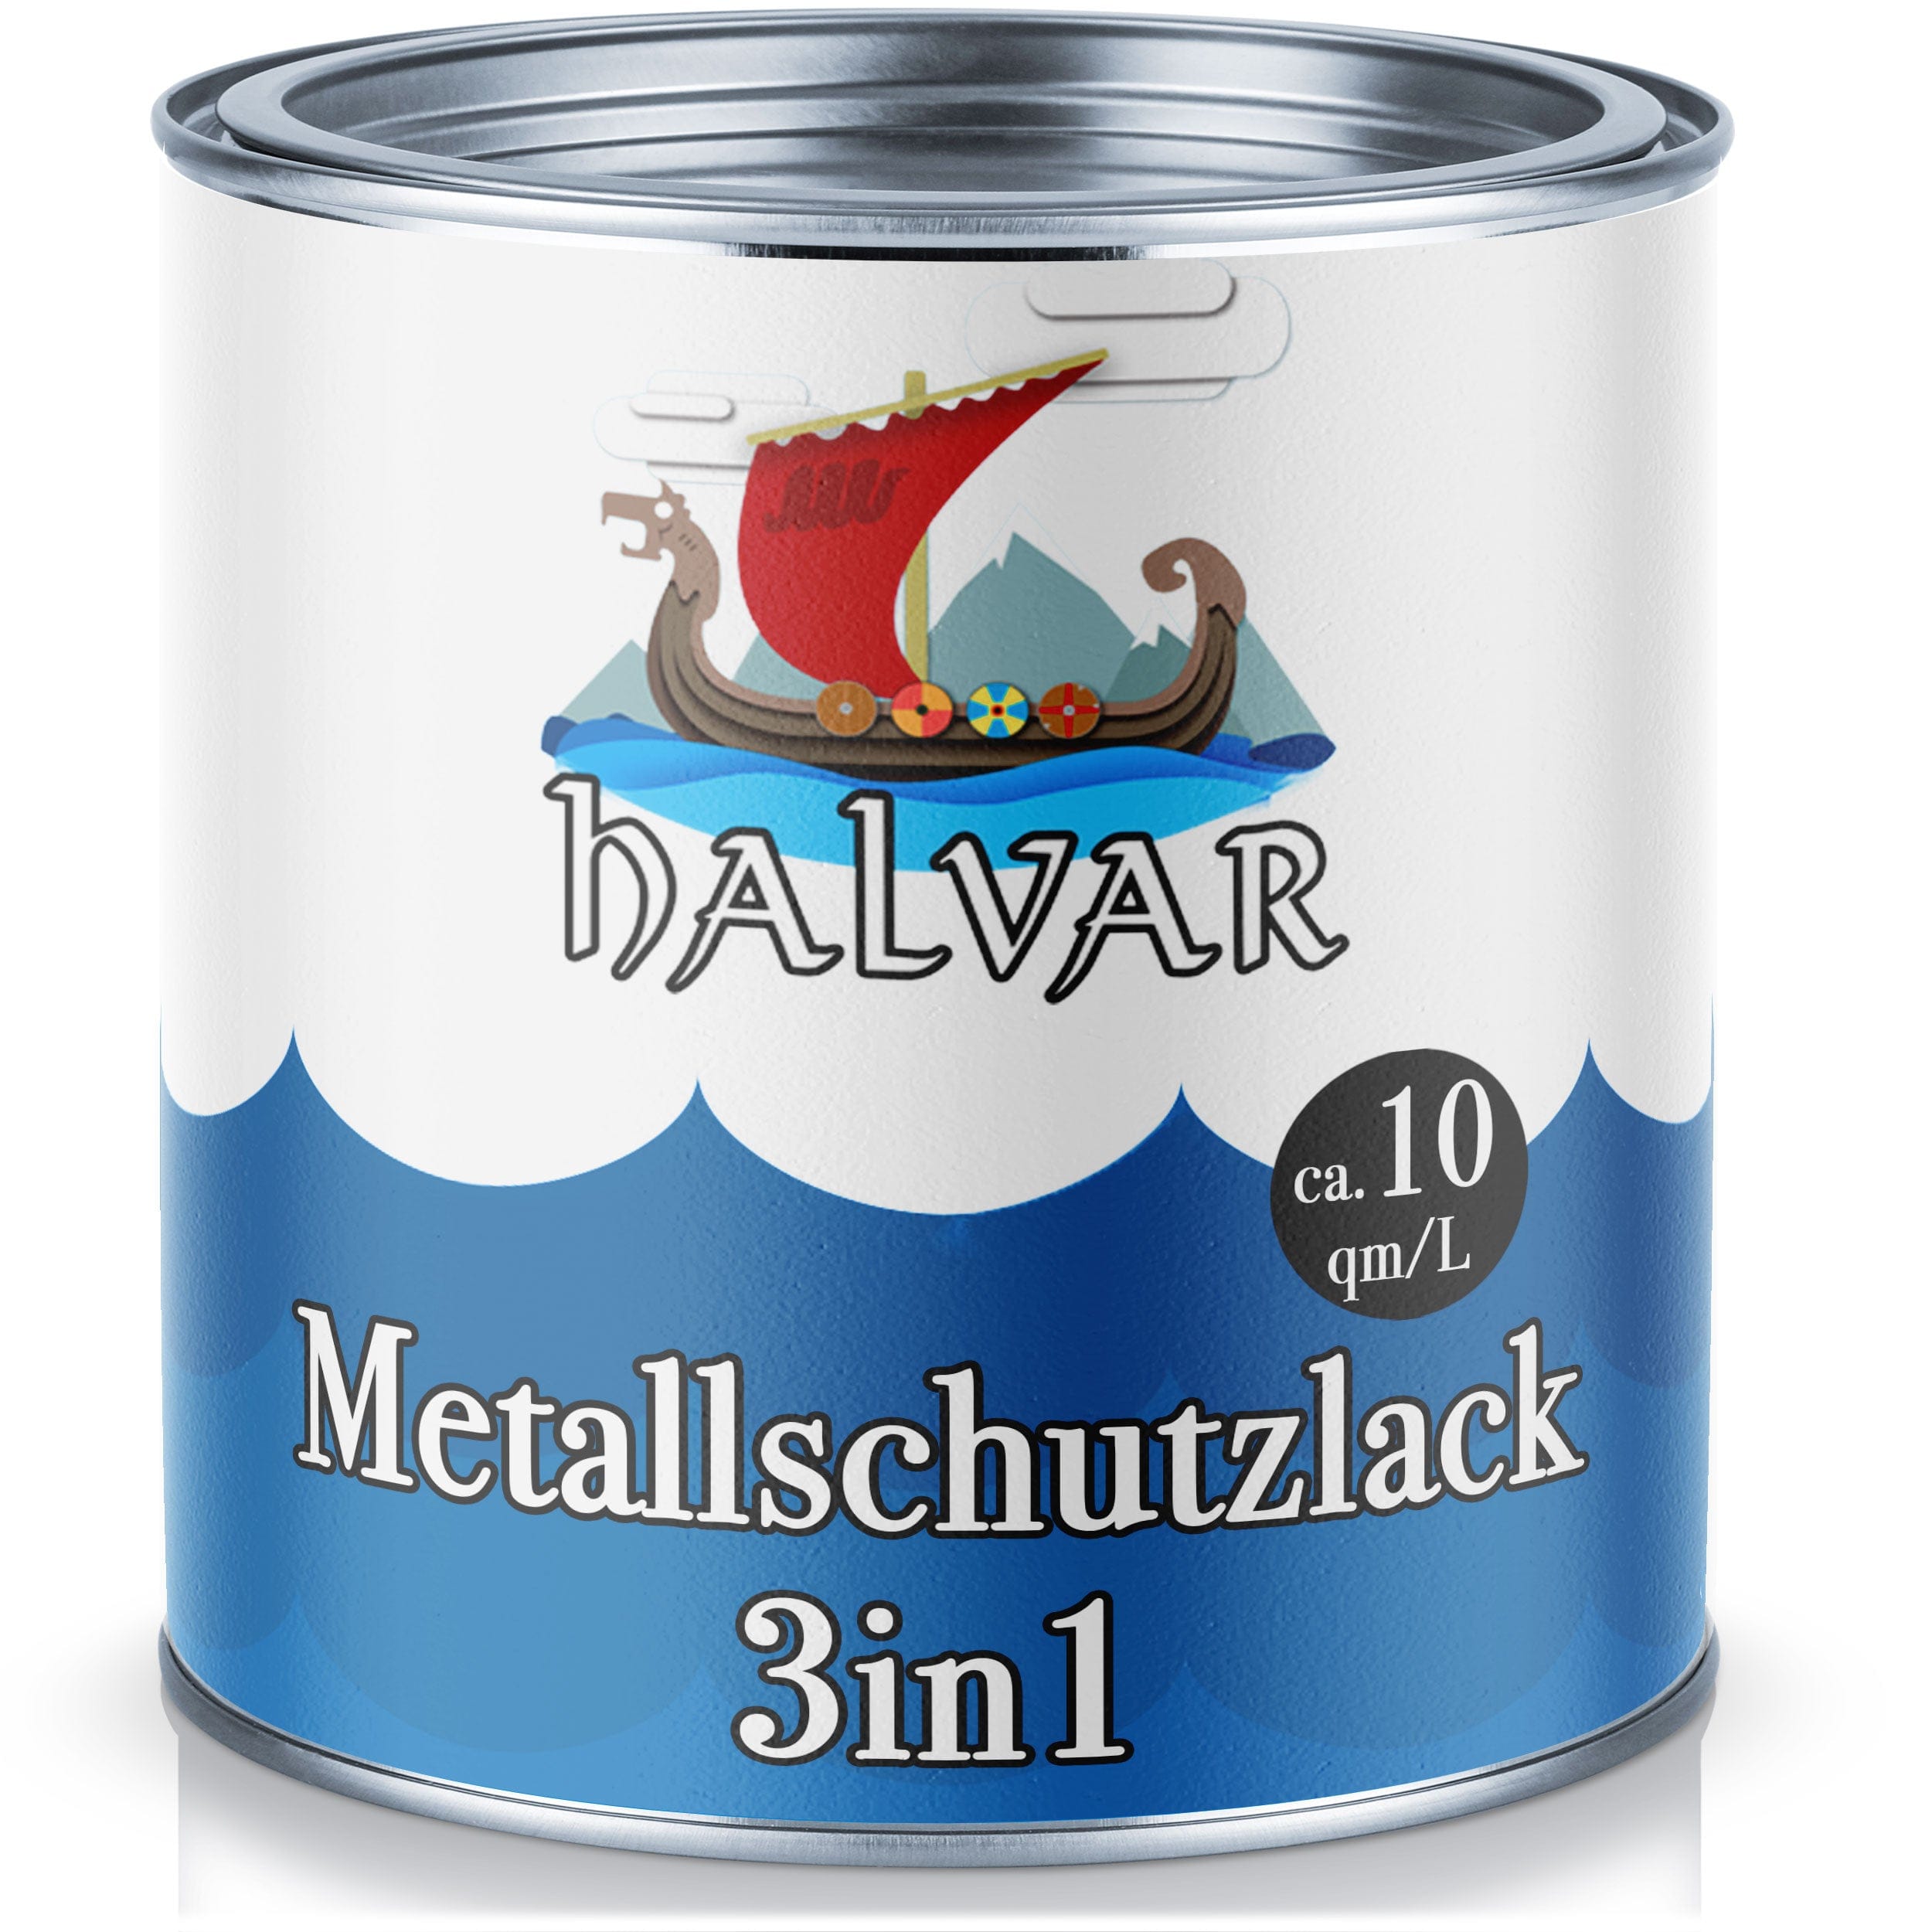 Halvar Lacke & Beschichtungen Halvar Metallschutzlack 3 in 1 - Metalllack